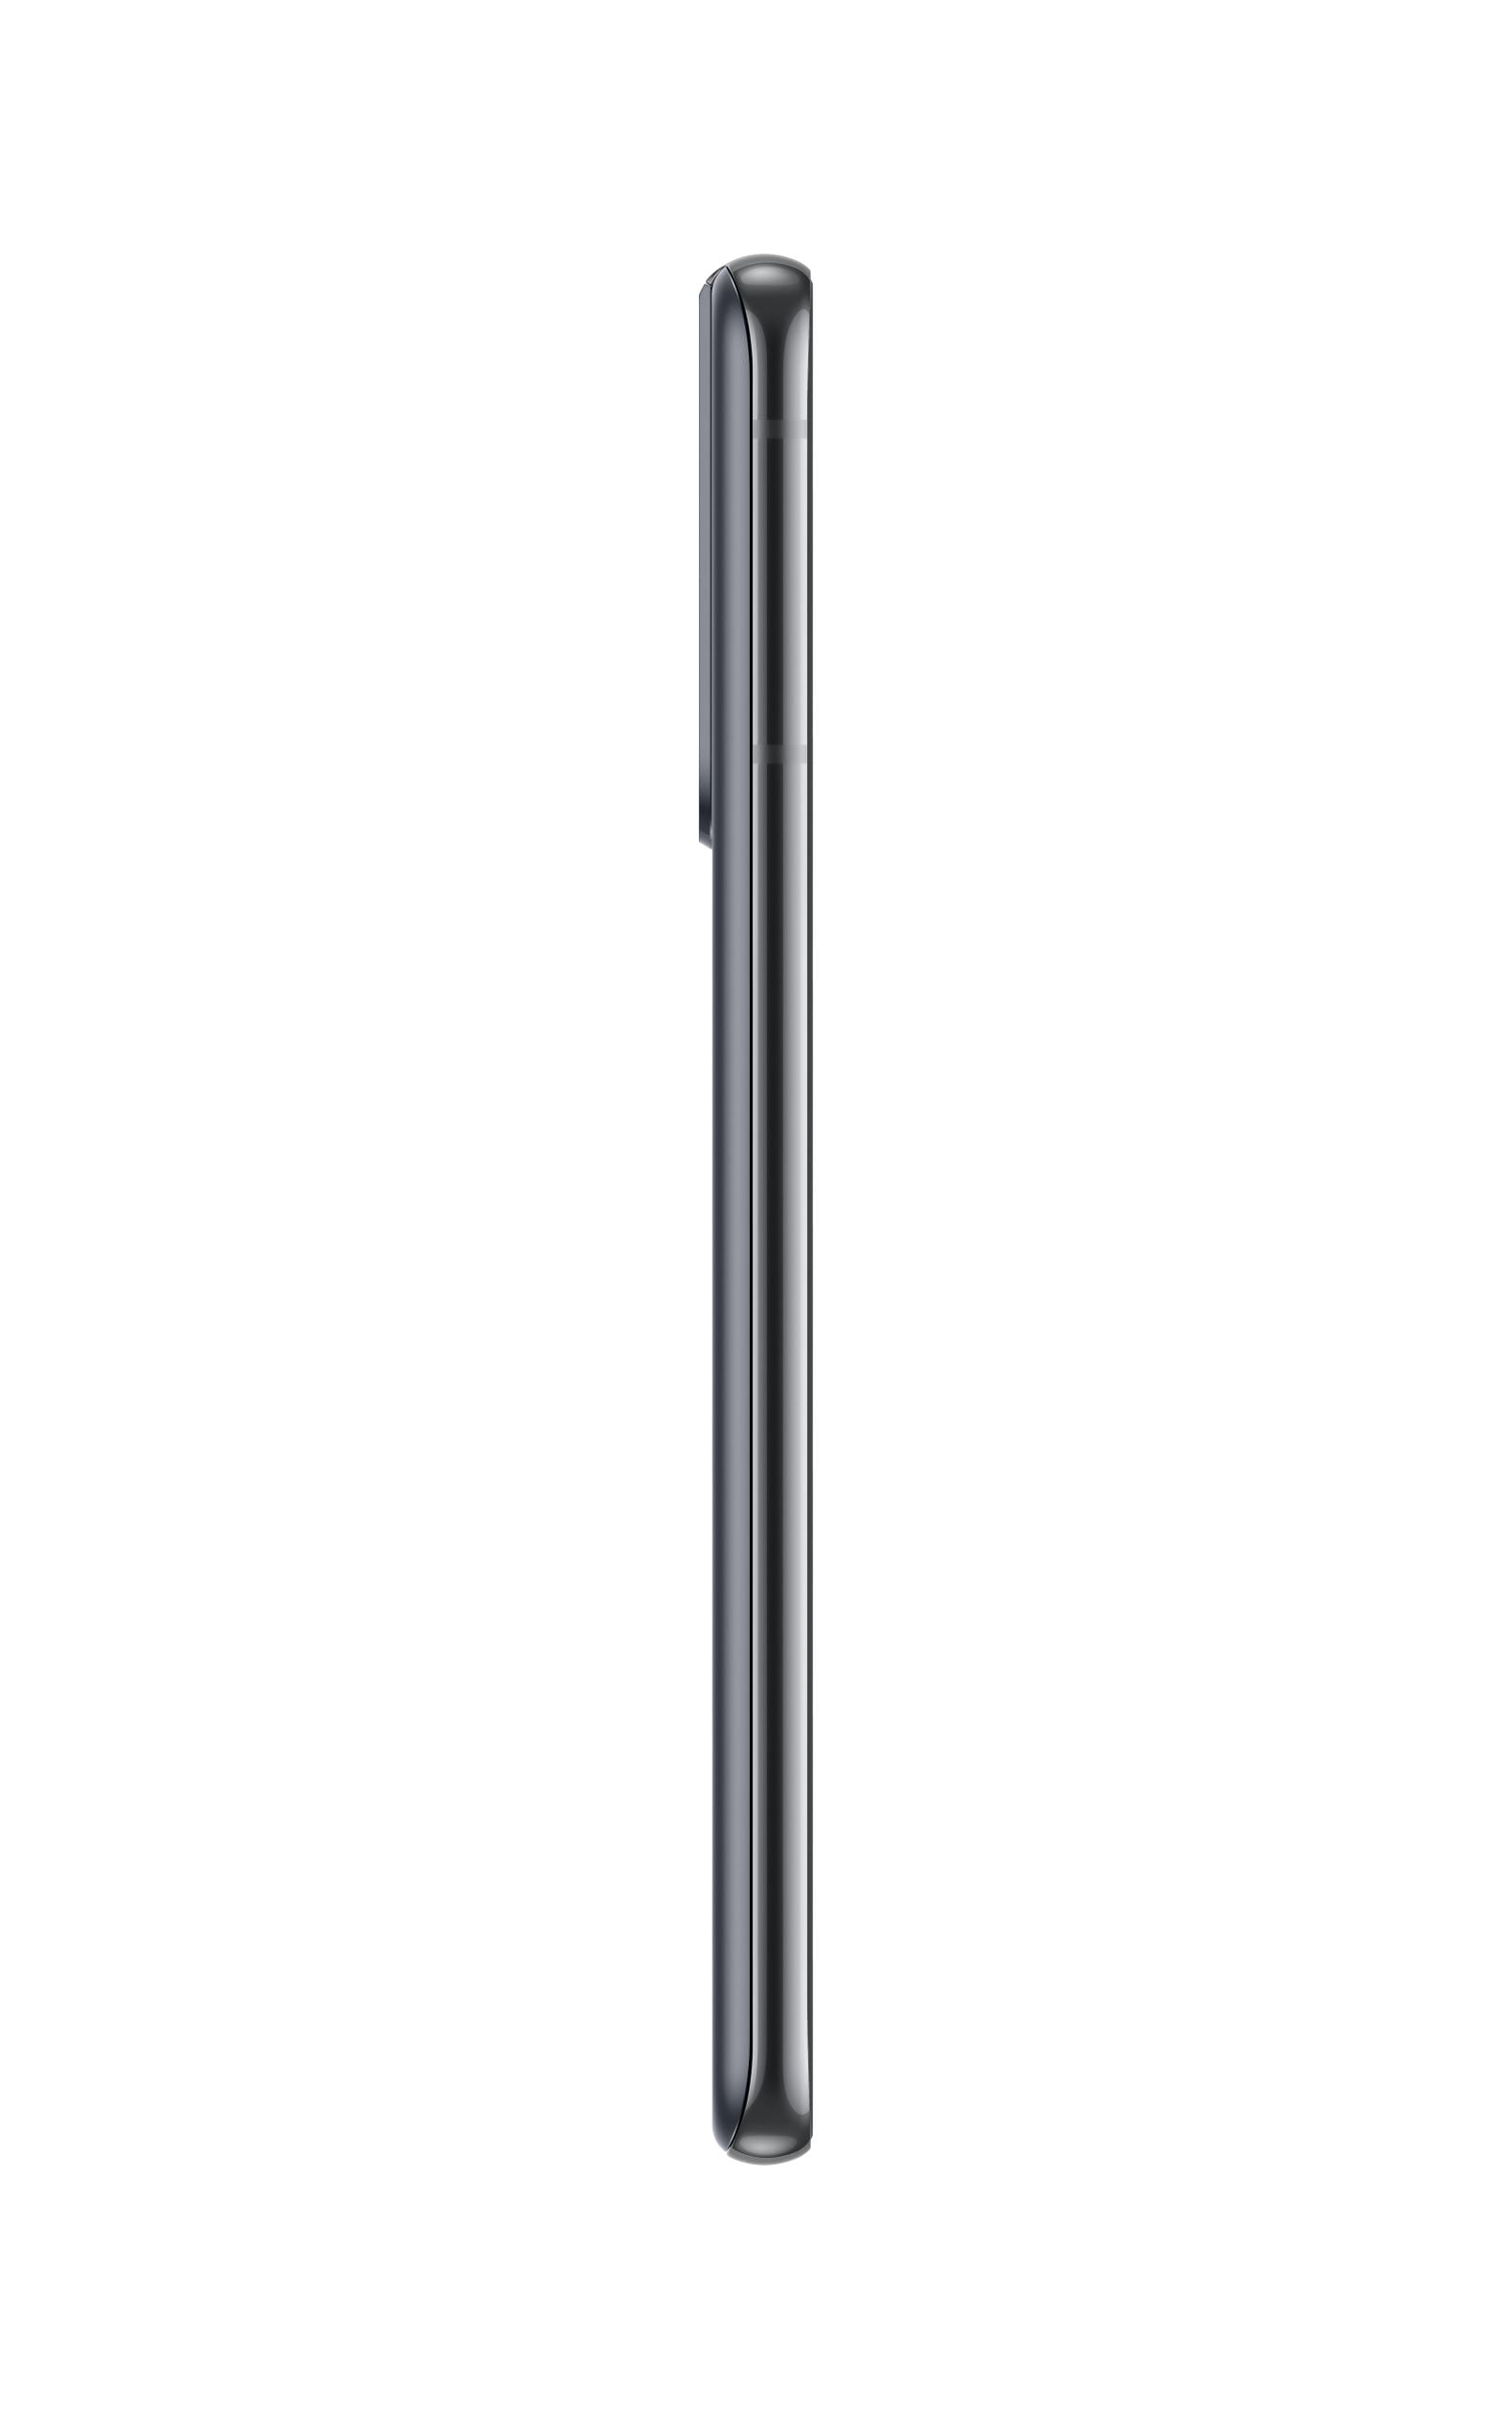 Samsung Galaxy S21 5G, 256GB Gray - Unlocked - Walmart.com